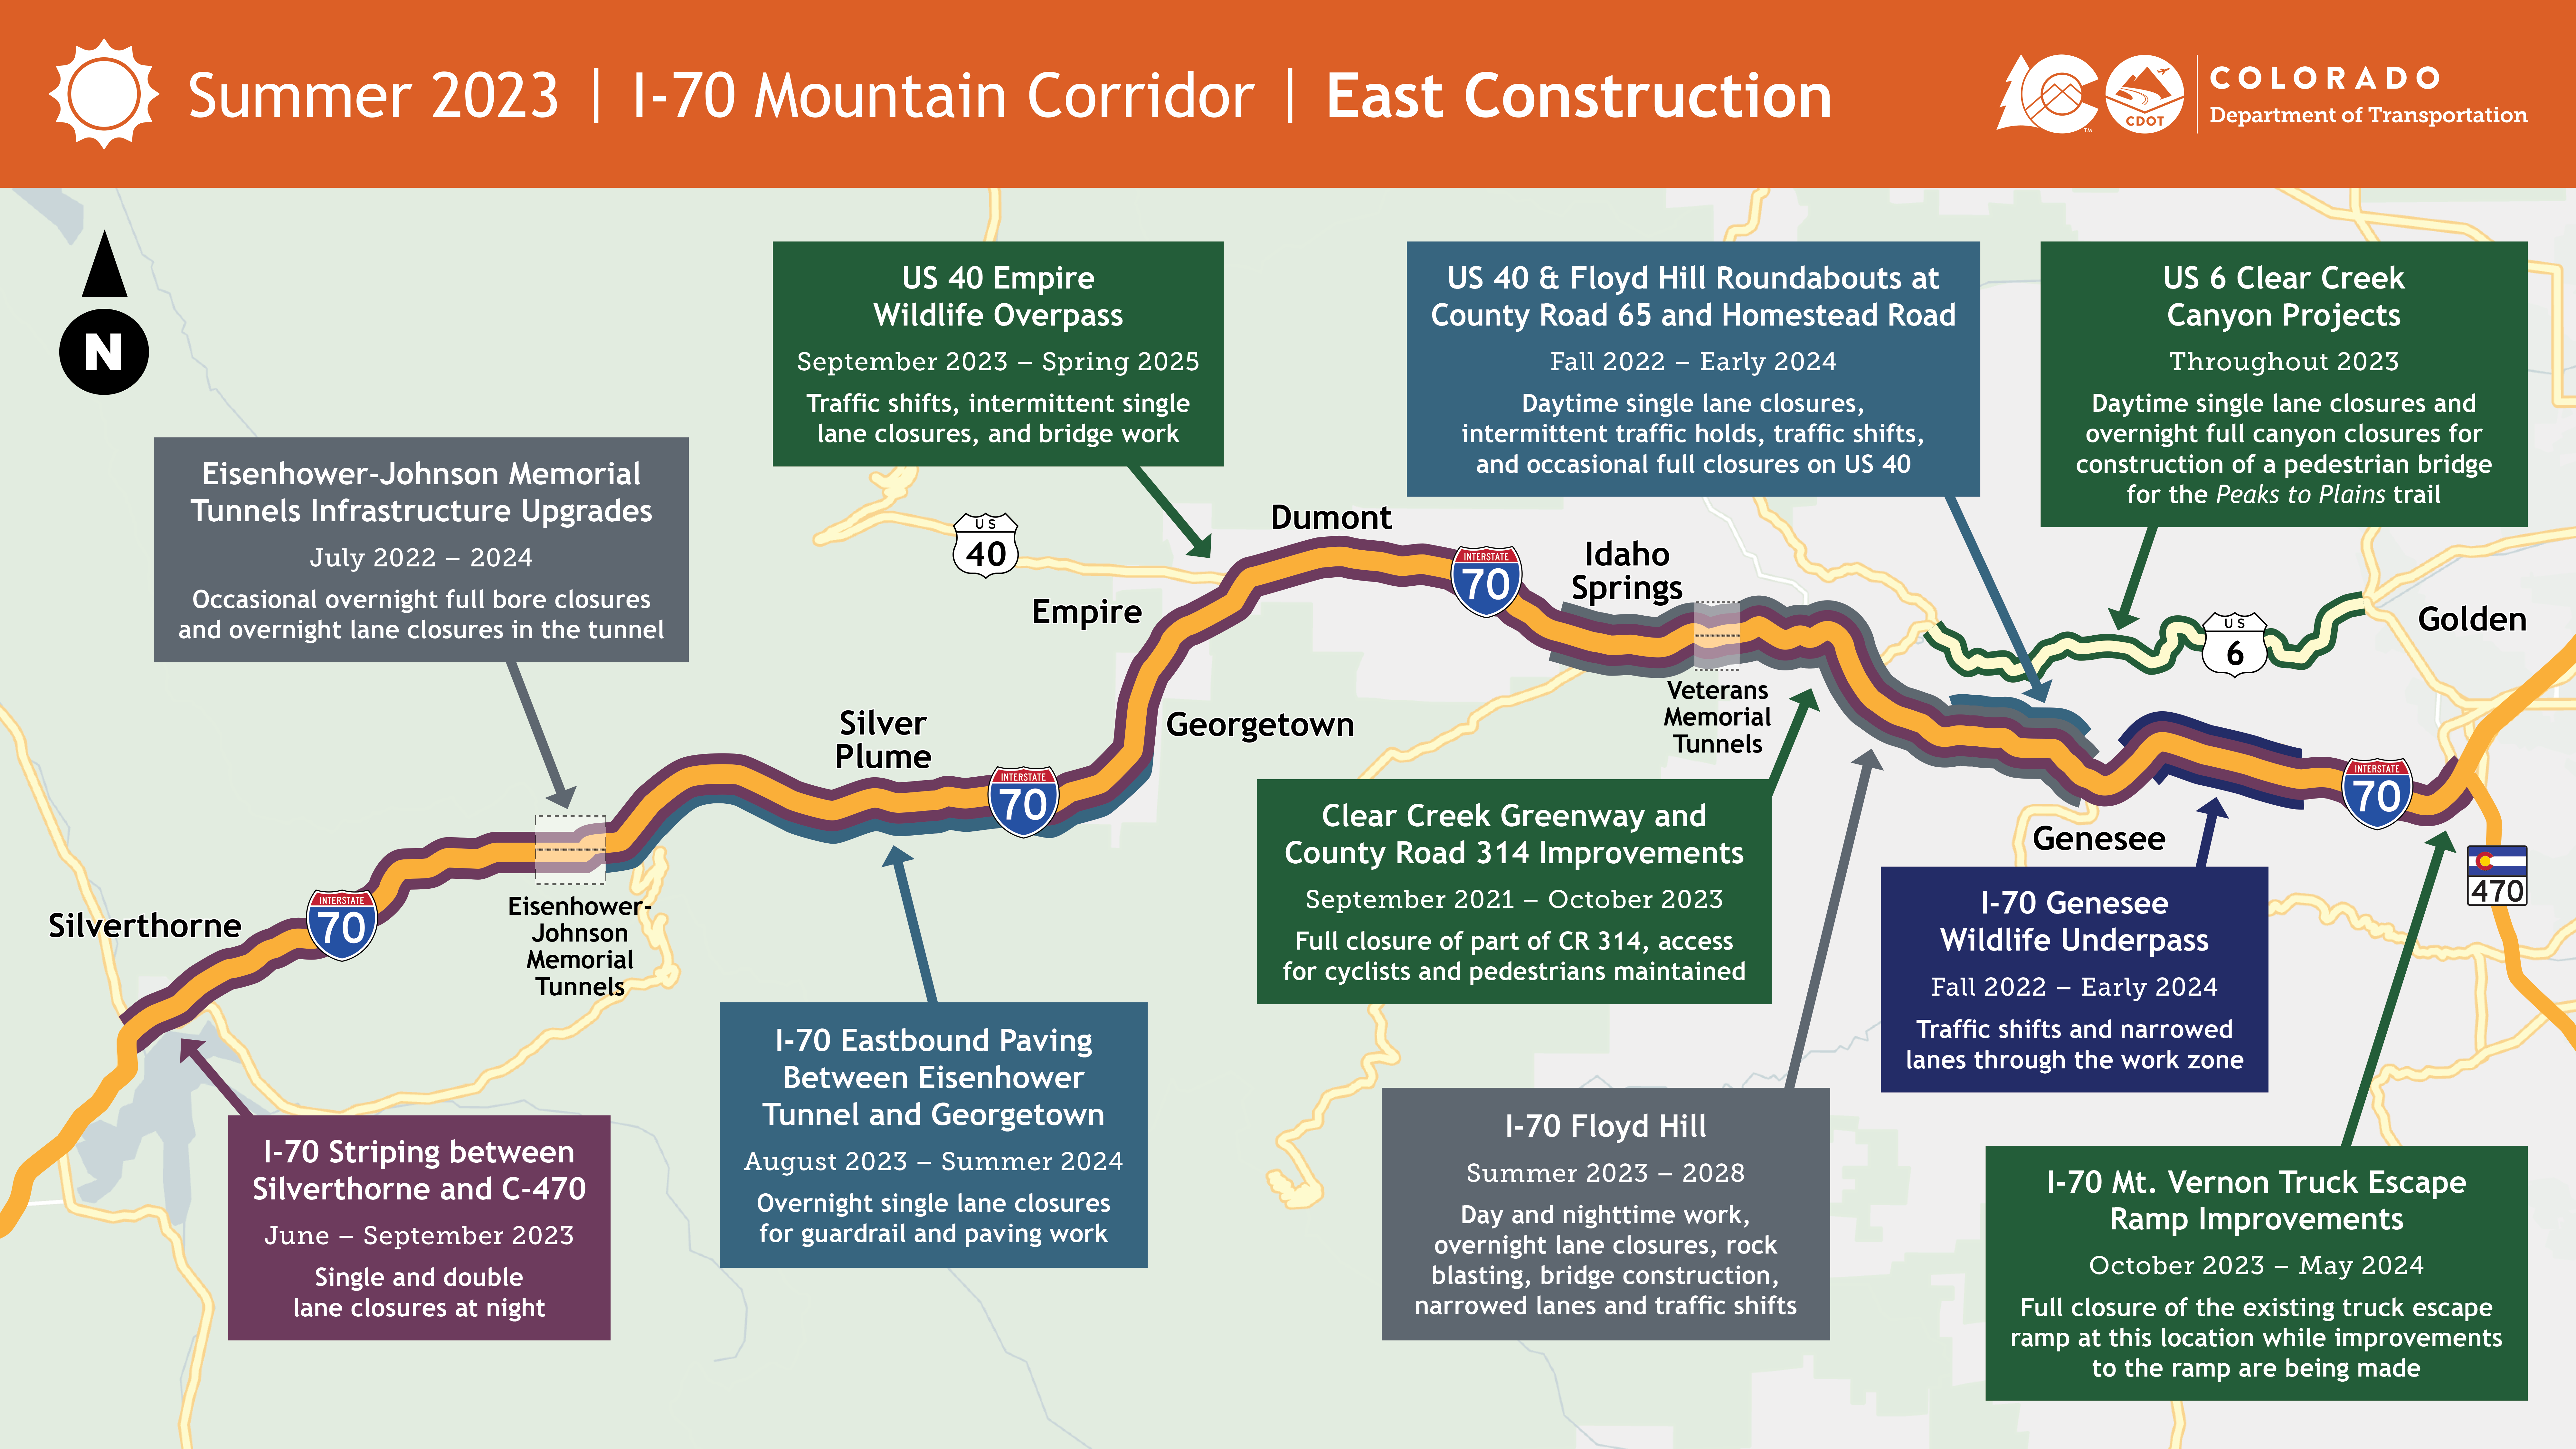 I-70-Mtn-Corridor-Construction-Map-Summer-2023_EAST (1).png detail image